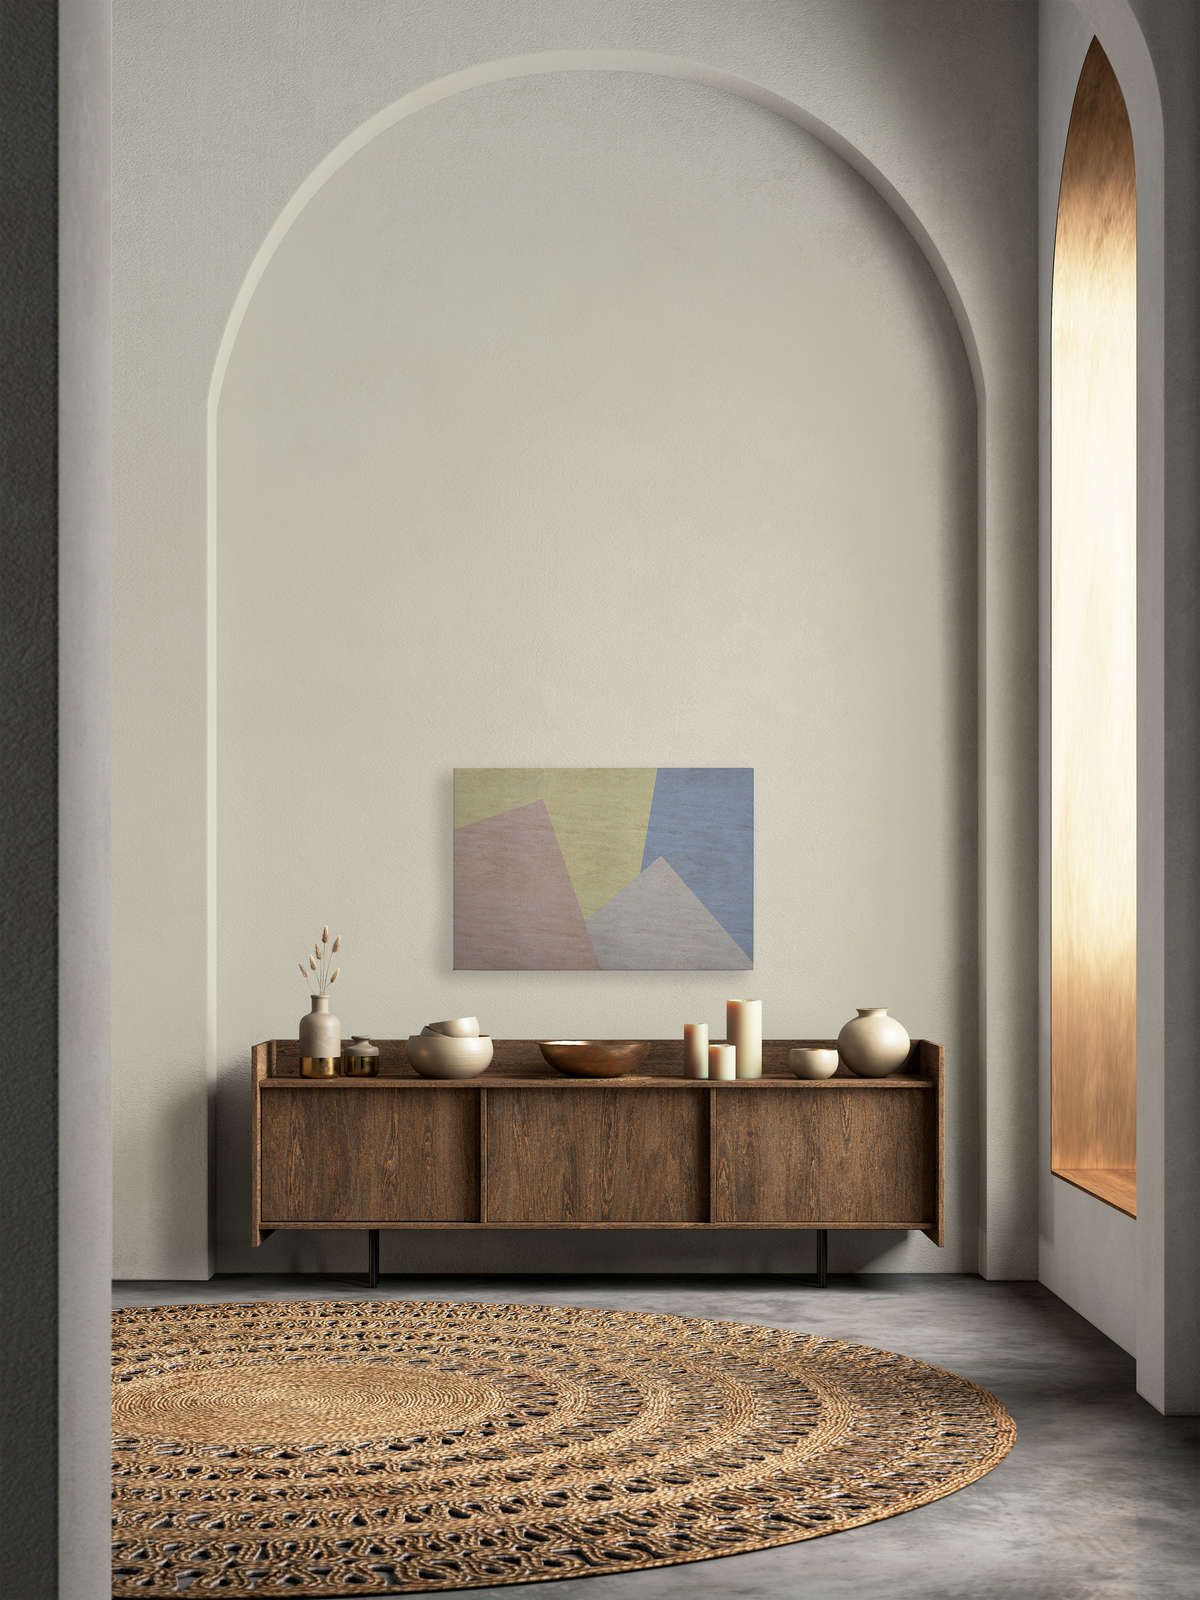             Inaly 3 - Abstract Bont Canvas Schilderij - Multiplex Optiek - 0.90 m x 0.60 m
        